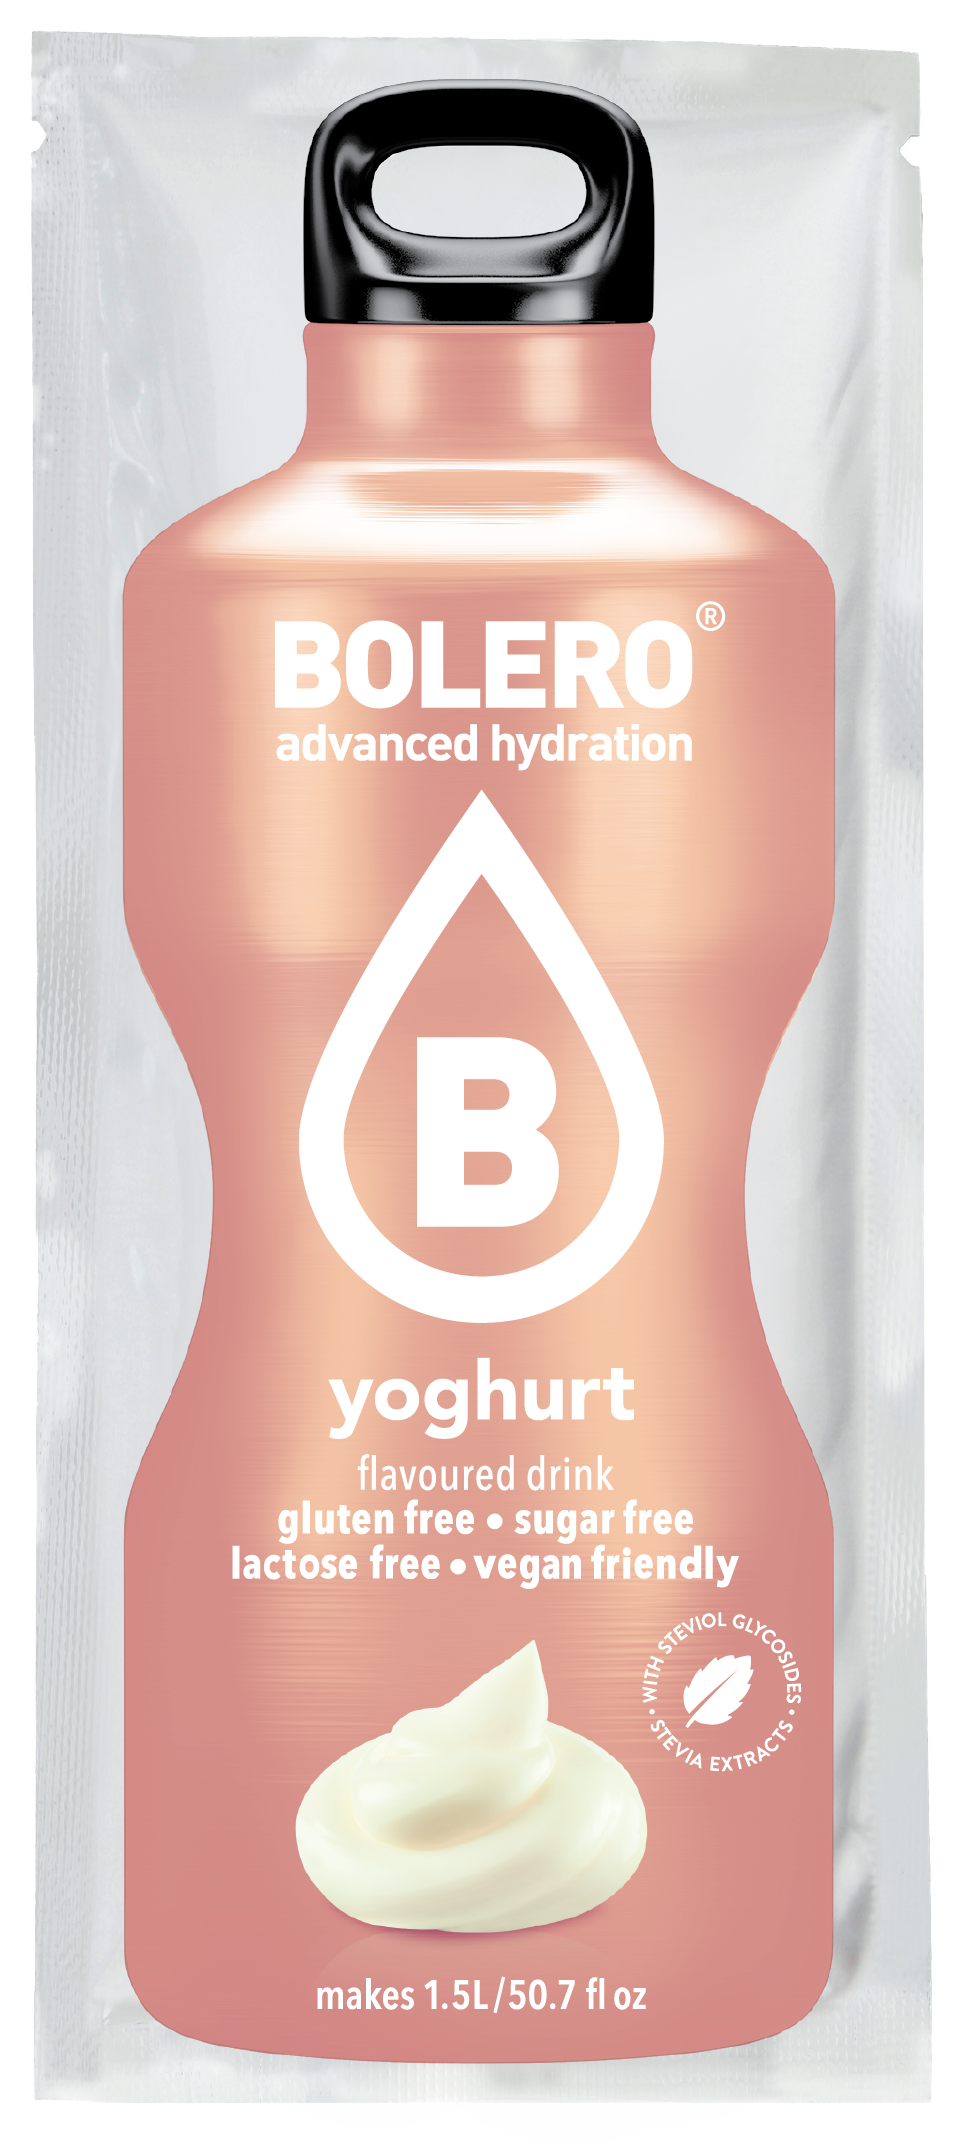 Bolero Advanced Hydration - Yoghurt (Box of 12 Sachets) - SALE PRODUCT - Exp 10-22-23